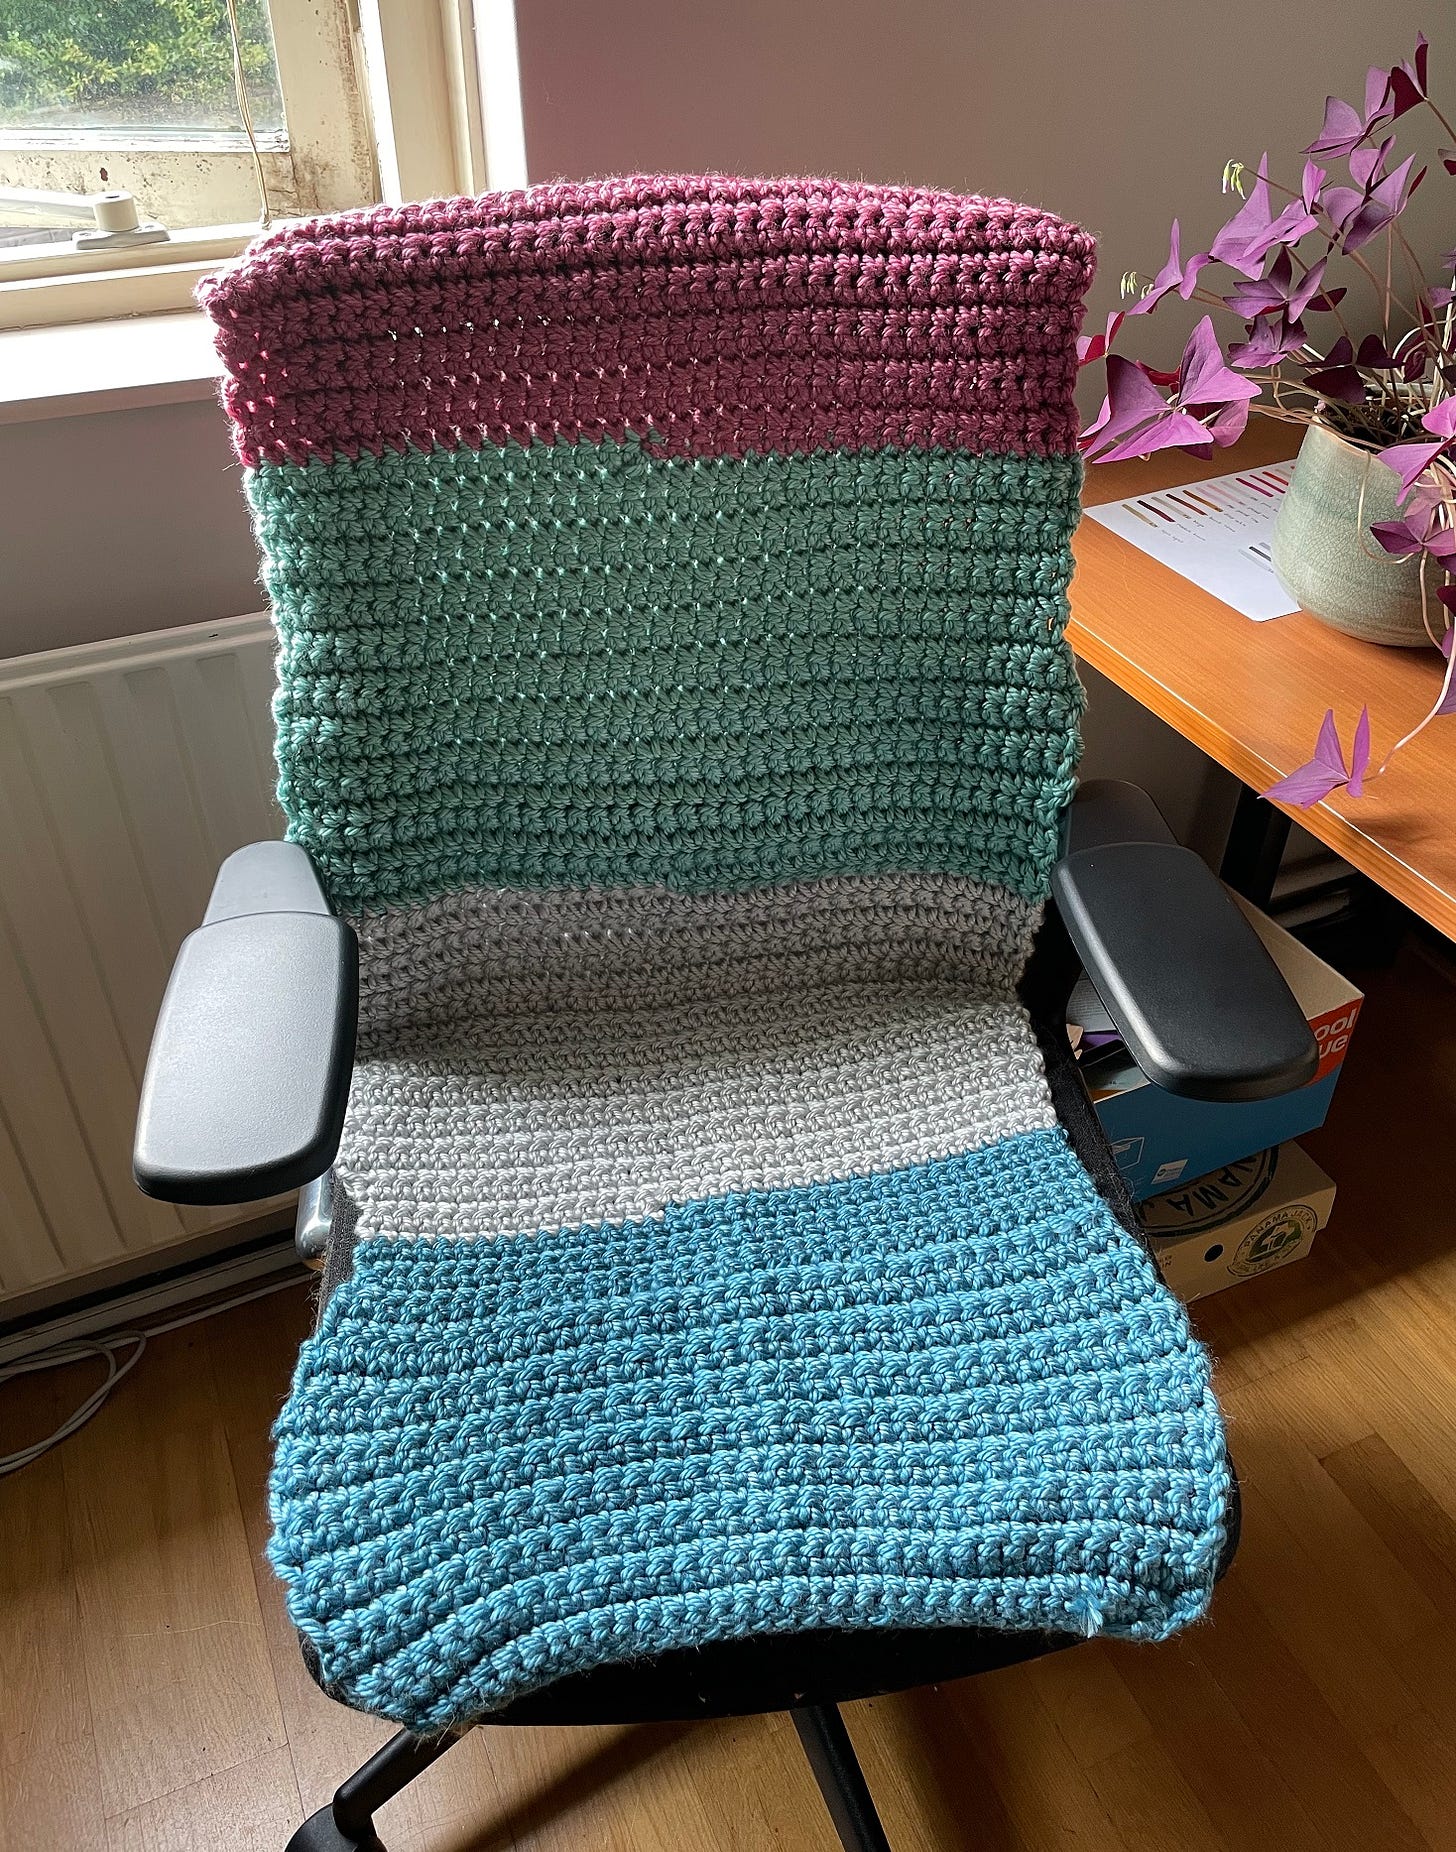 Crochet: a four-colour chair cover